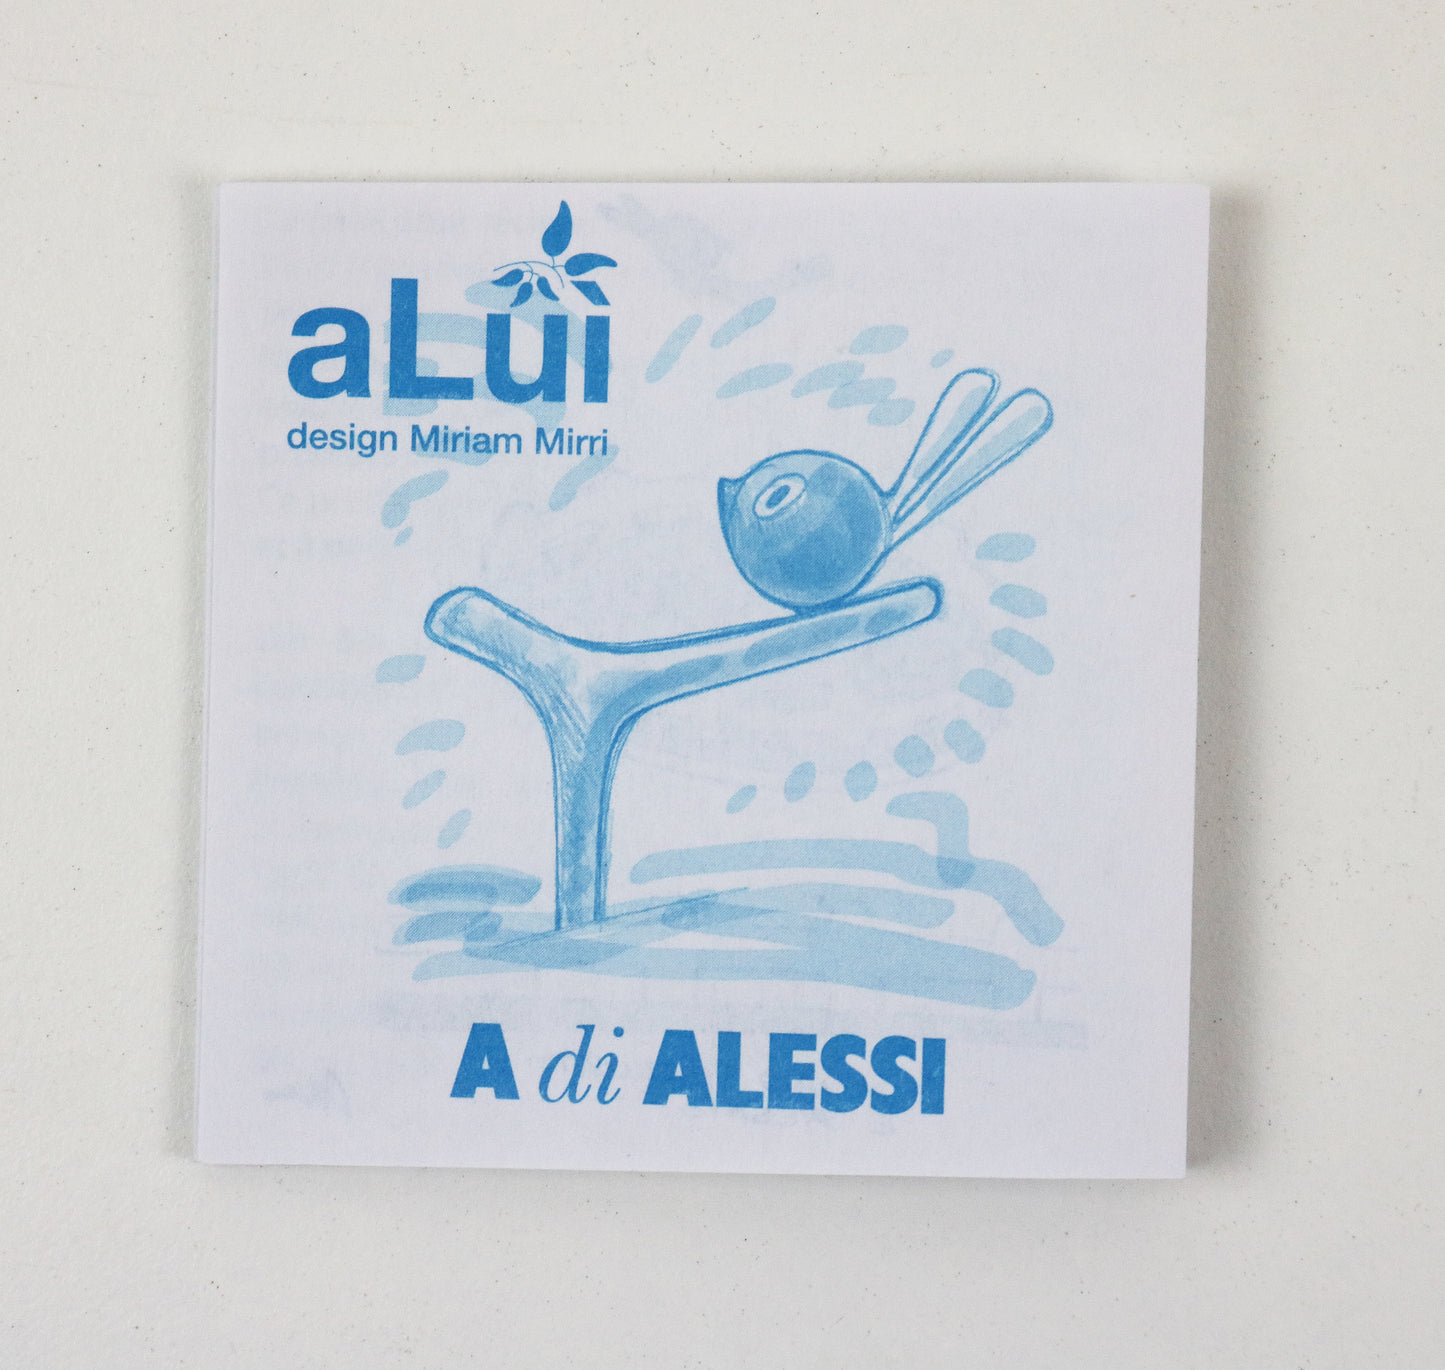 Alessi aLui spice container designed by Miriam Mirri - rare retired design